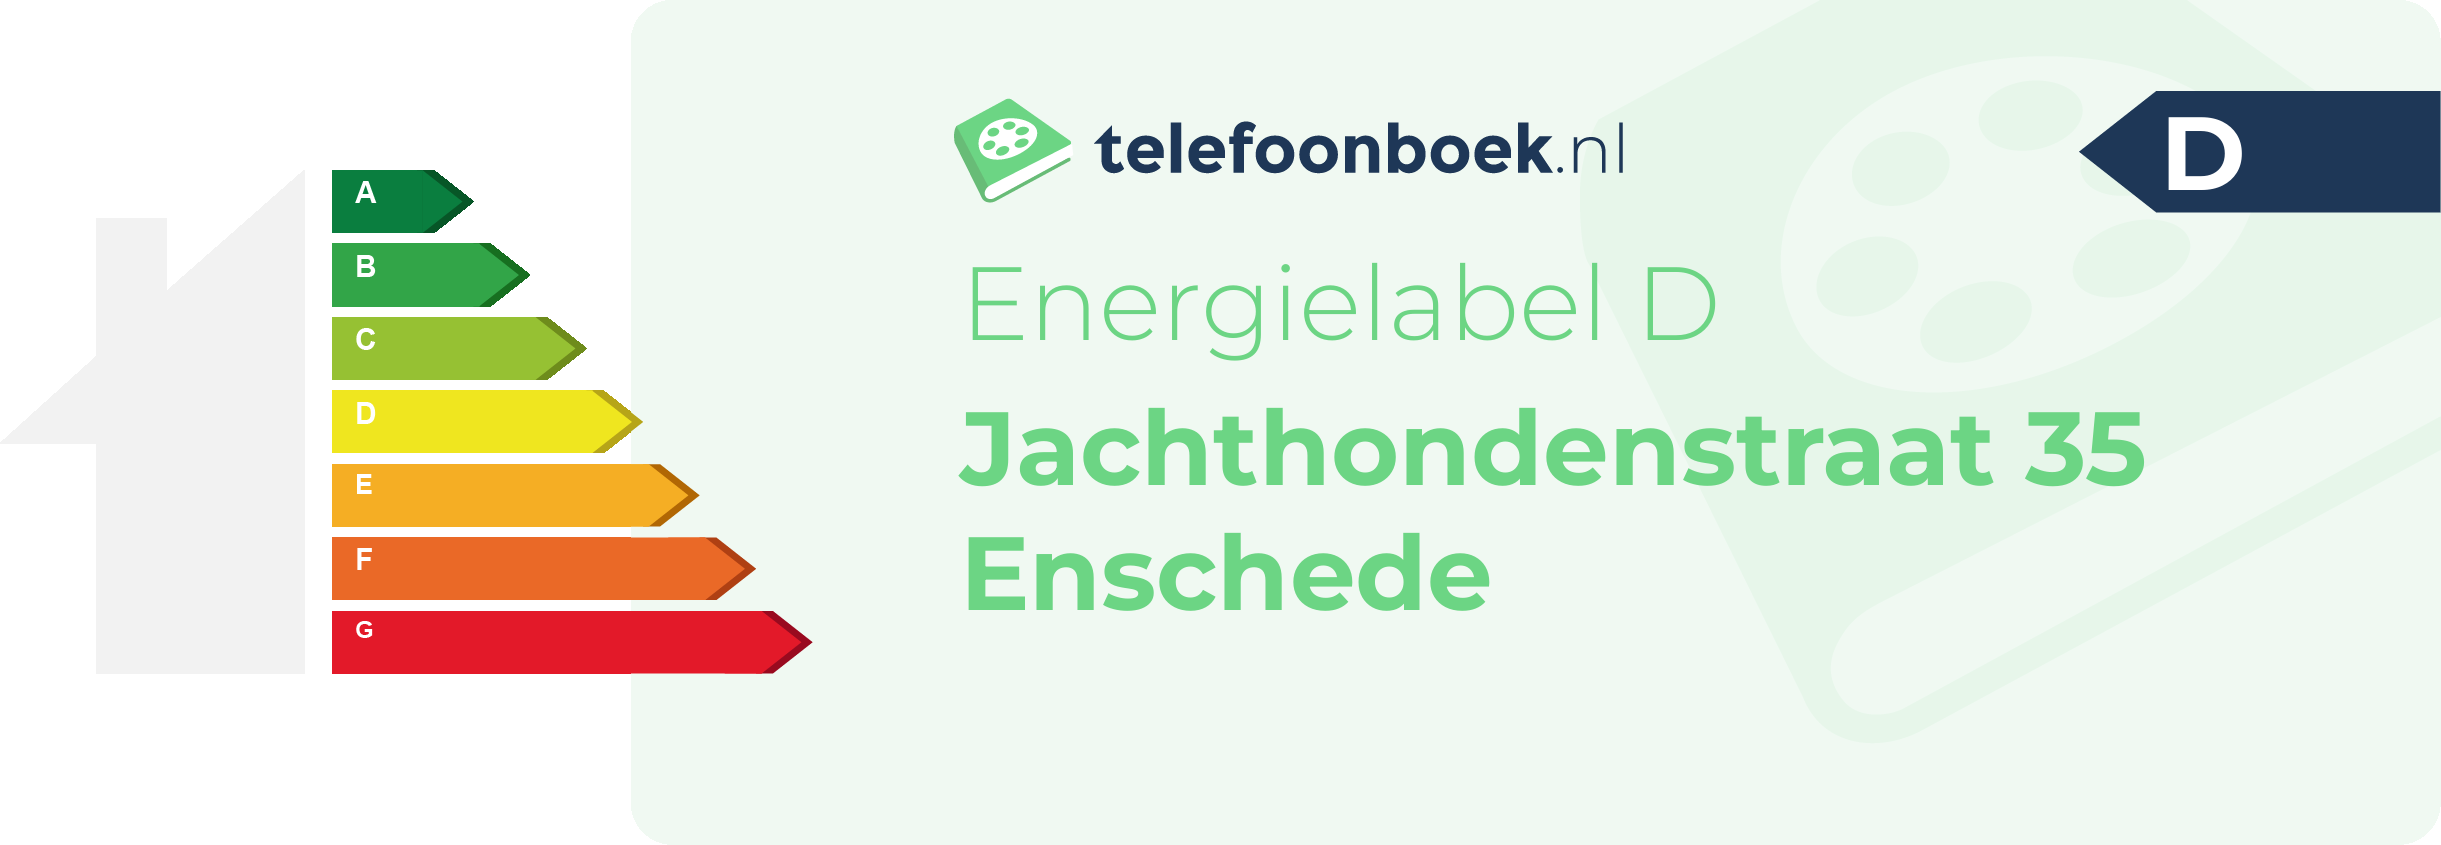 Energielabel Jachthondenstraat 35 Enschede